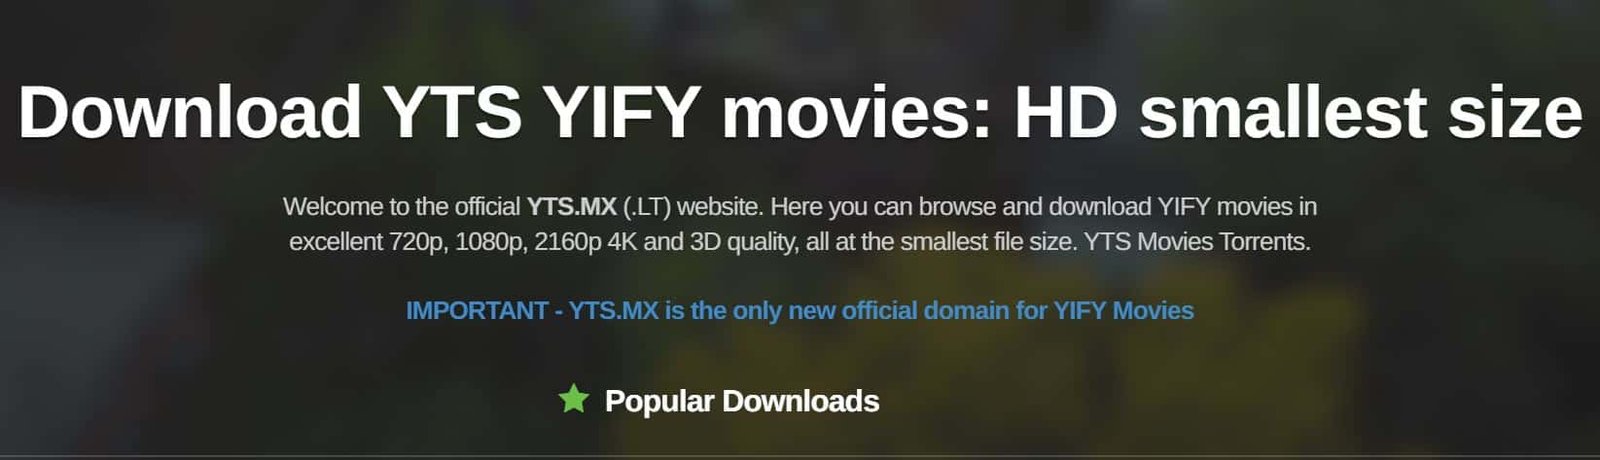 Yify movies